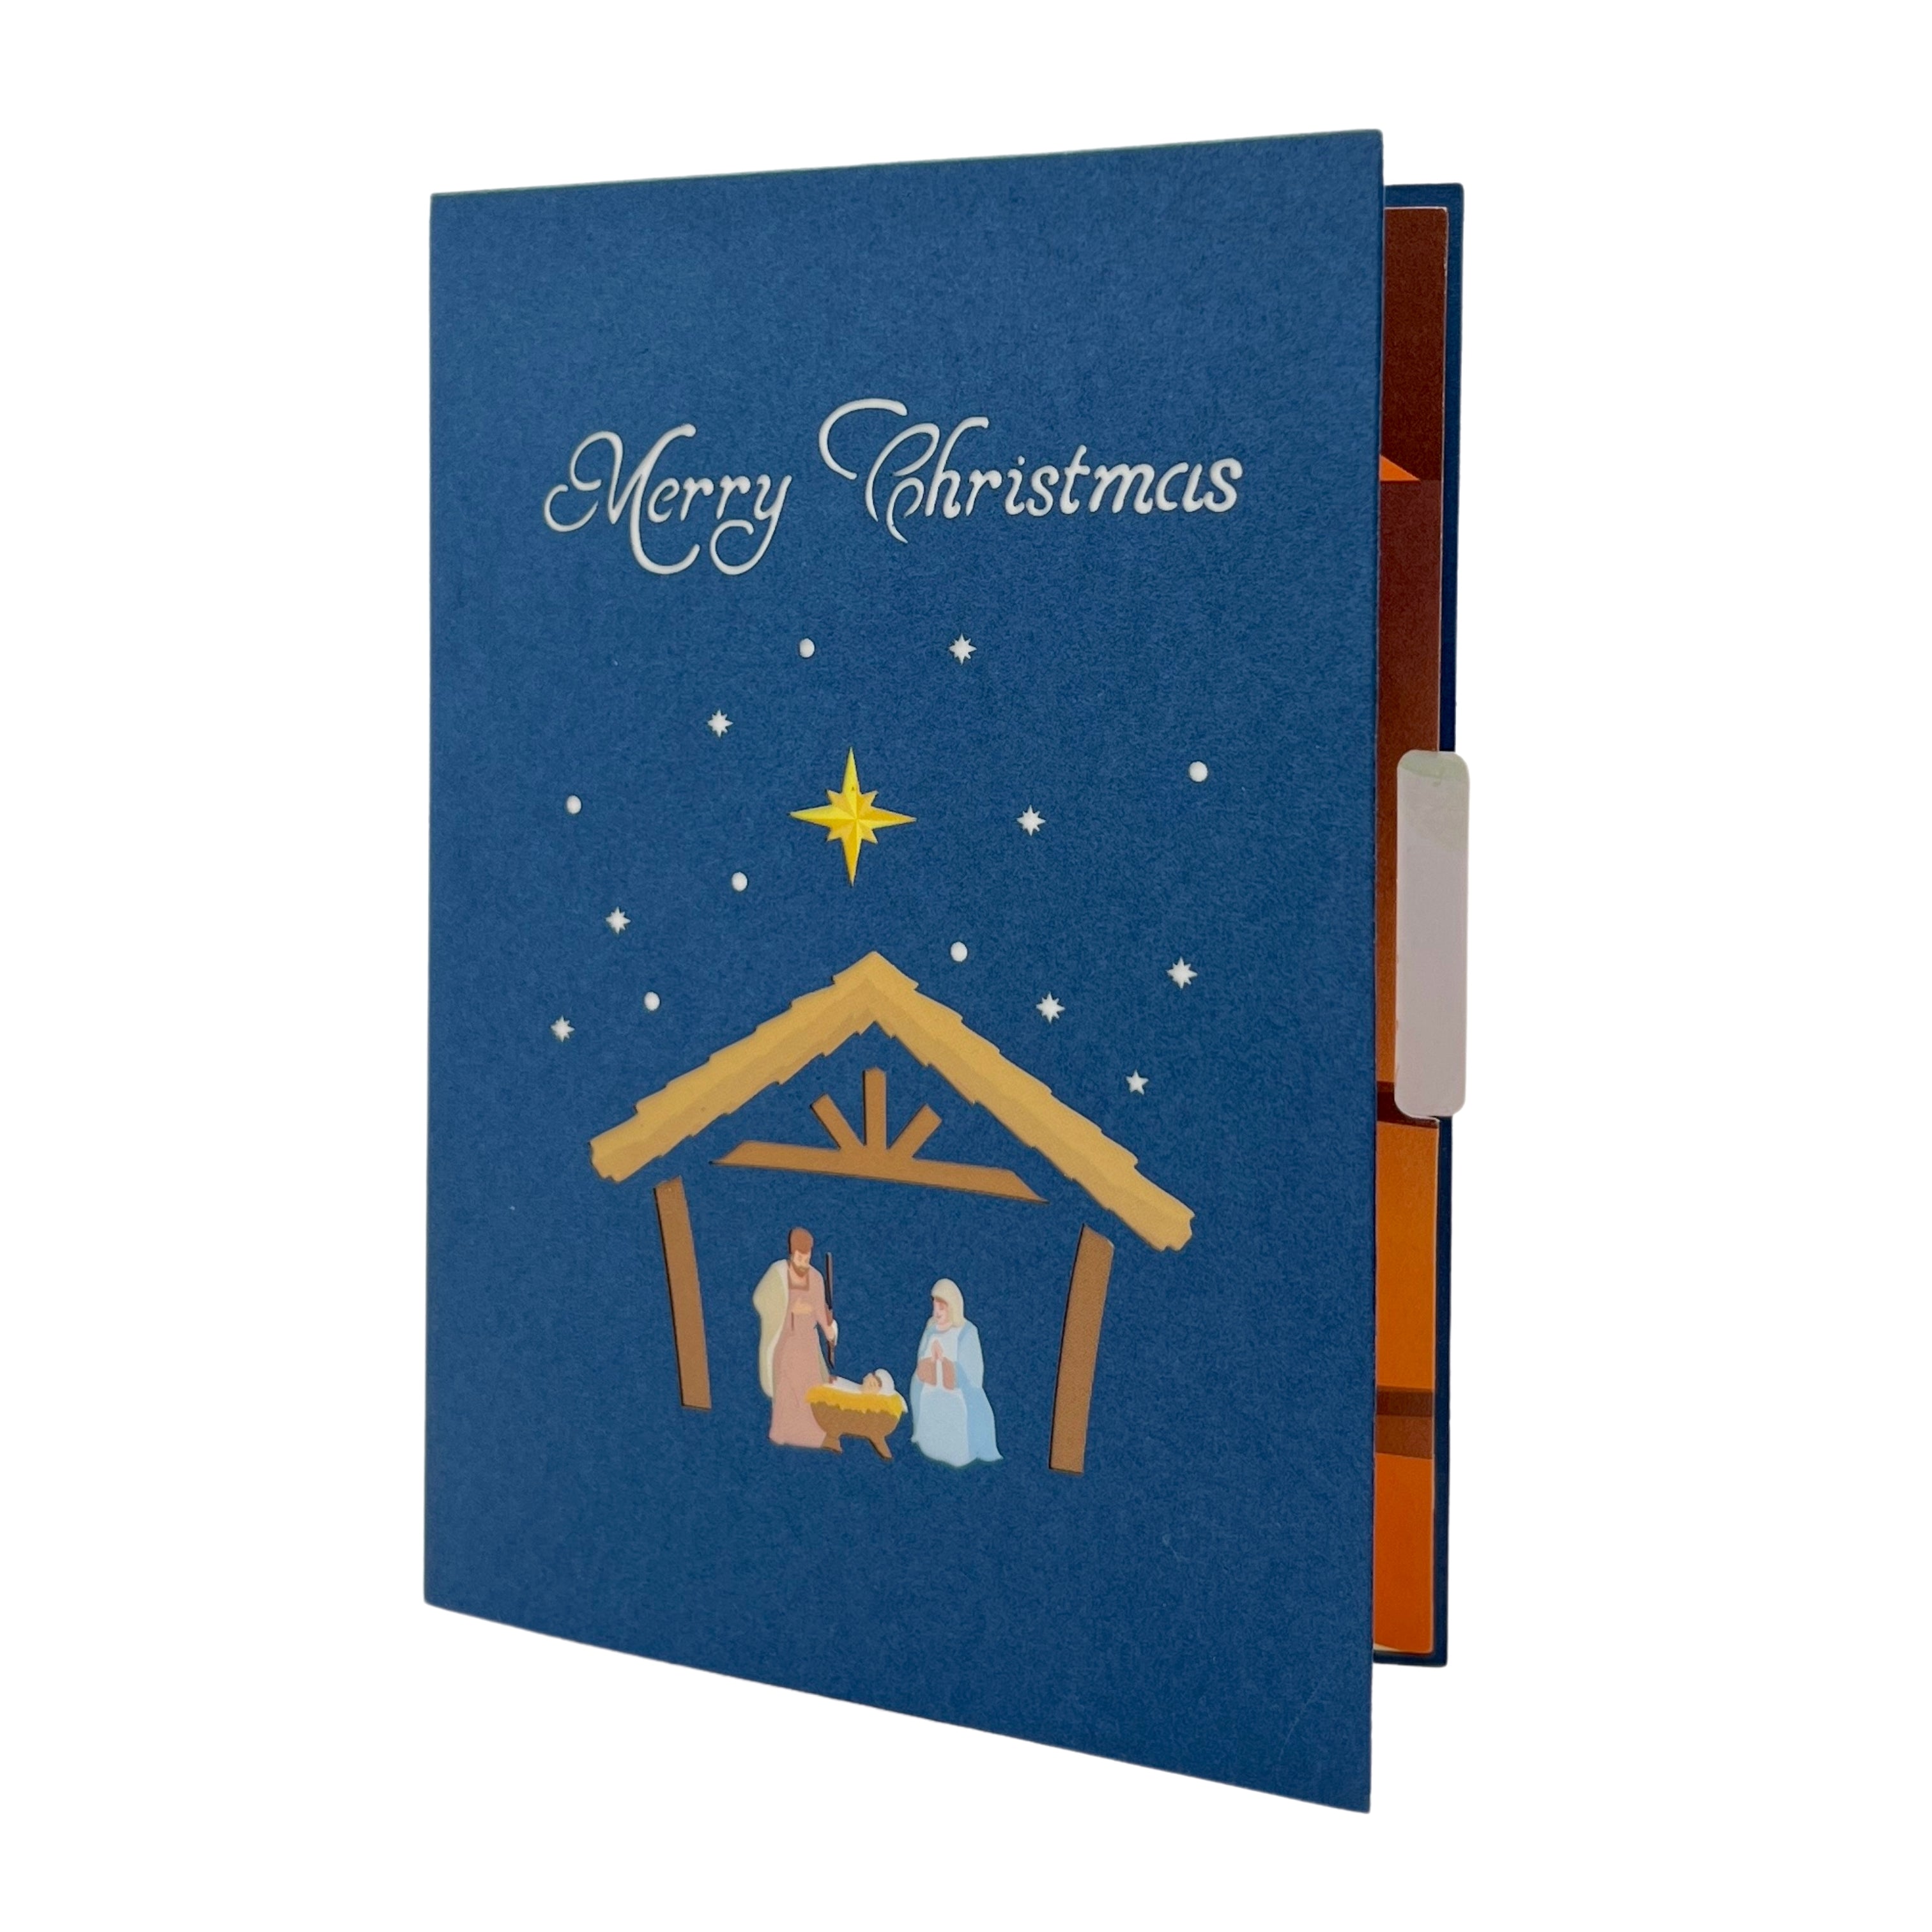 Pop Up Greeting Card Holy Night Nativity, Jesus Christ Birth Scene, Christmas Decoration, Christmas Gift, Christmas gift idea, Holiday Card